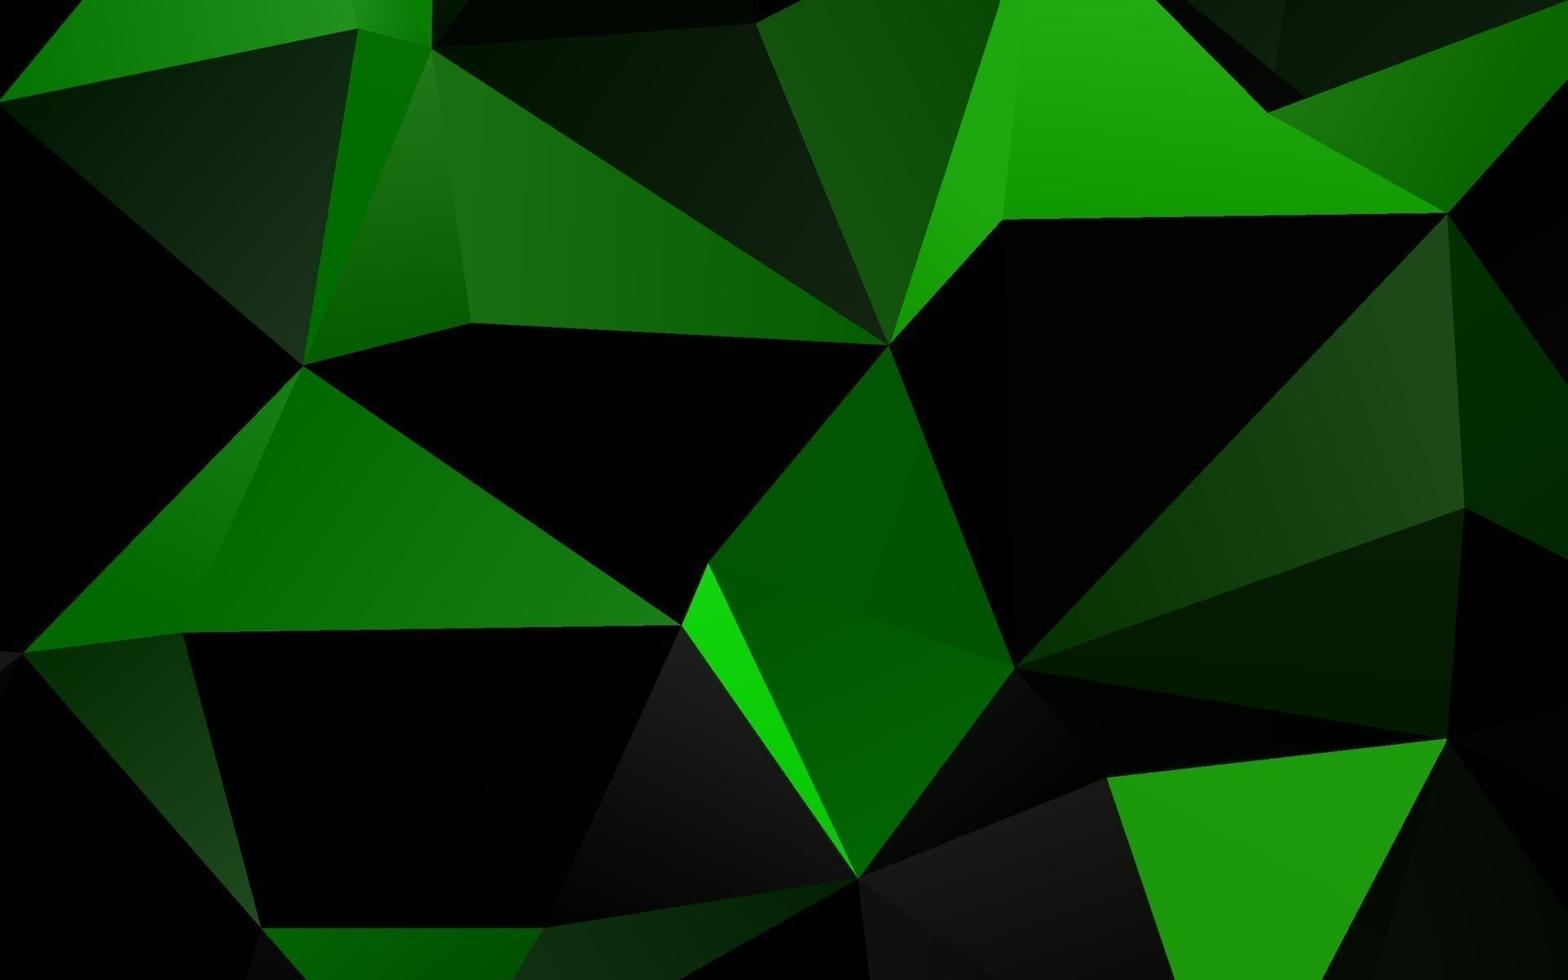 fond polygonale vecteur vert clair.